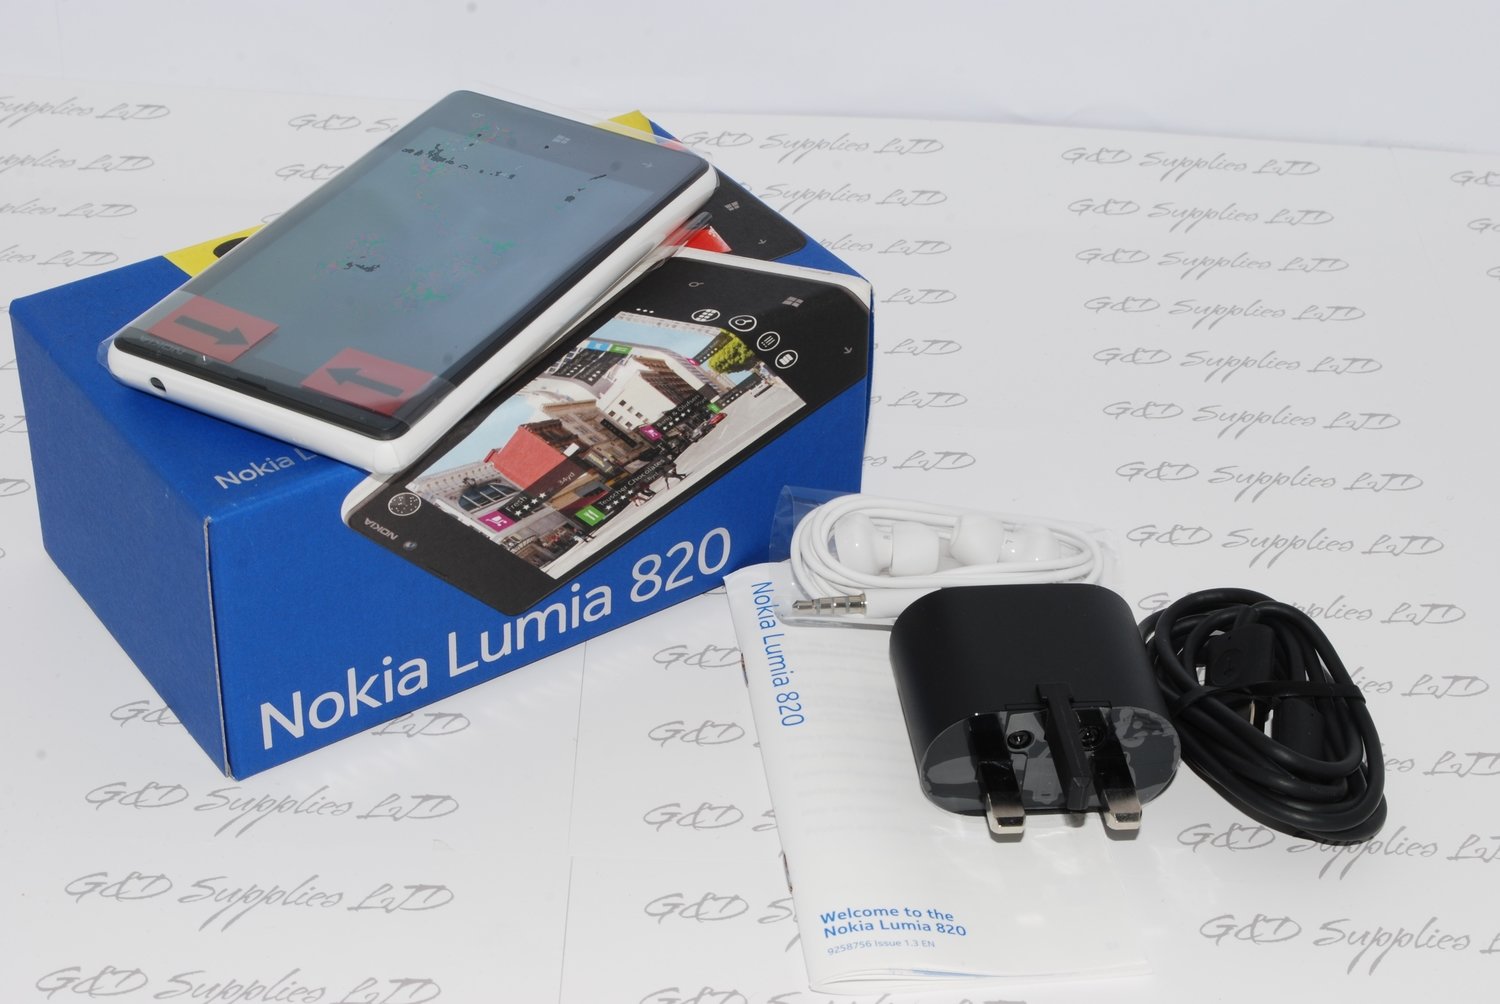 Nokia Lumia 820 Sim-Free Unlocked 4G Windows Smartphone mobile phone